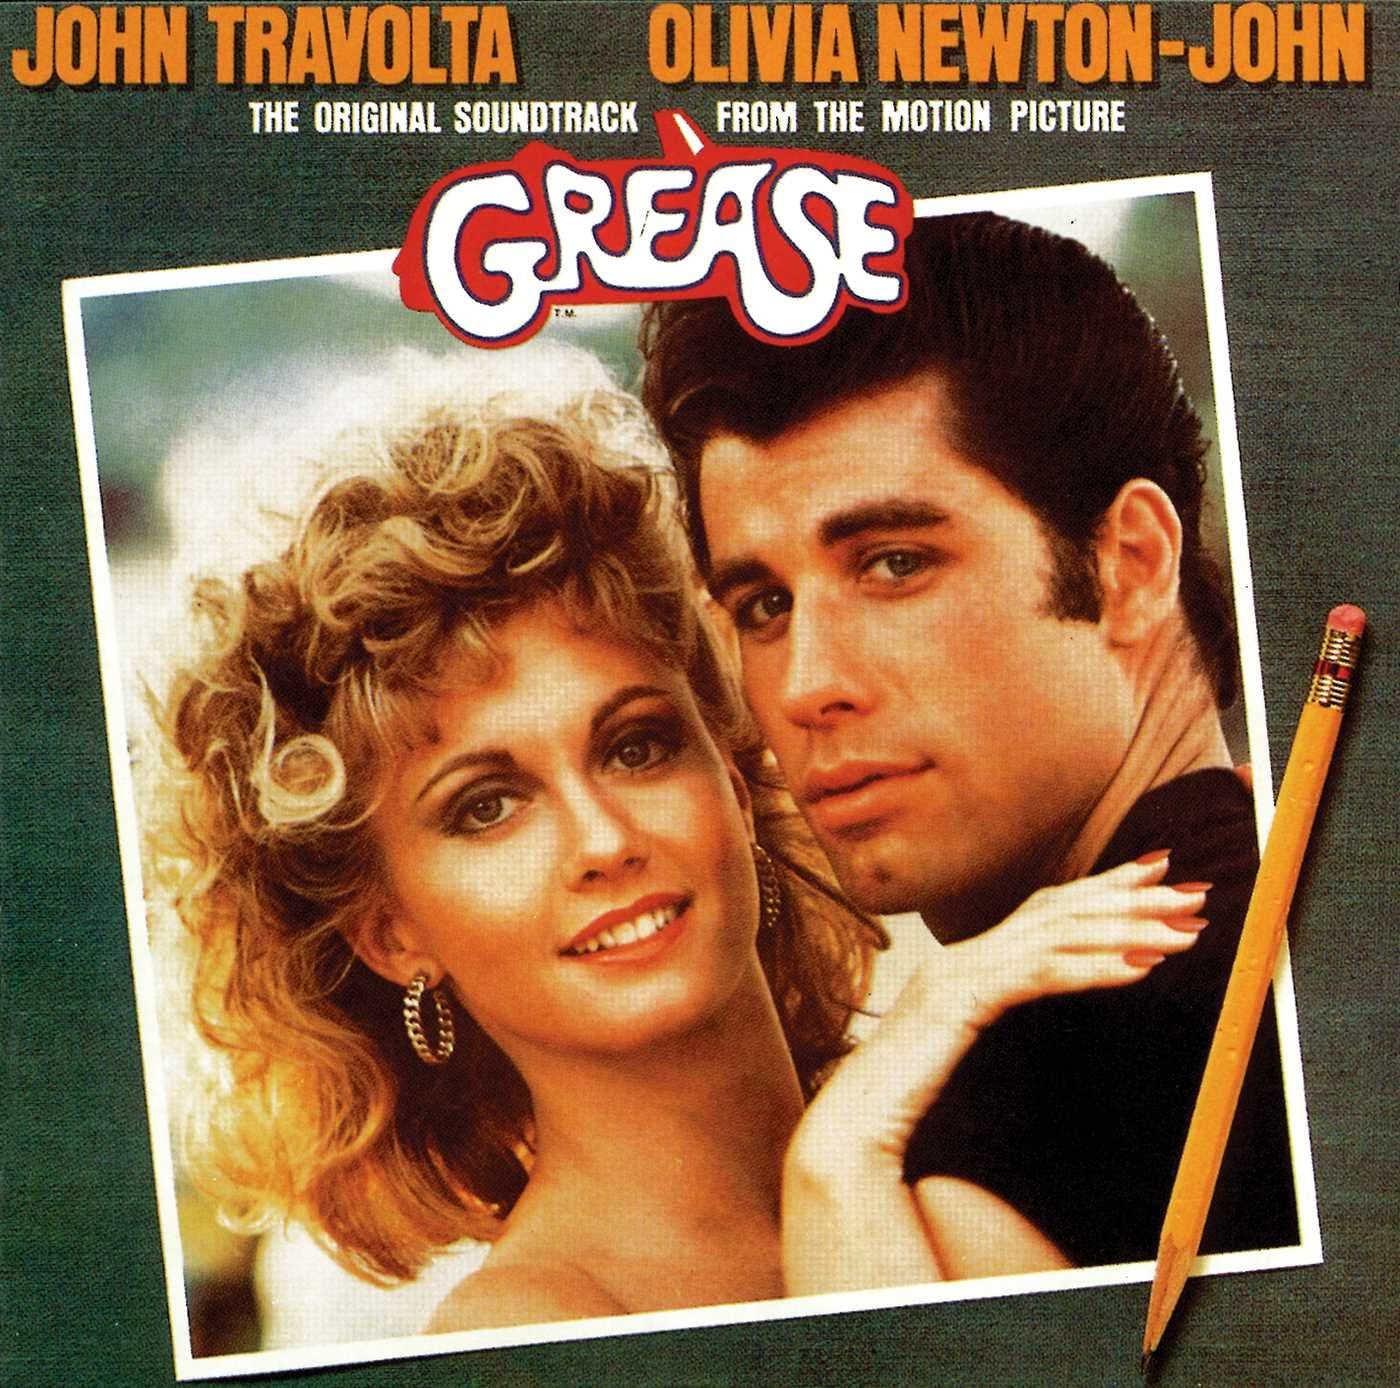 You're the One That I Want - John Travolta e Olivia Newton-John - Testo e Traduzione